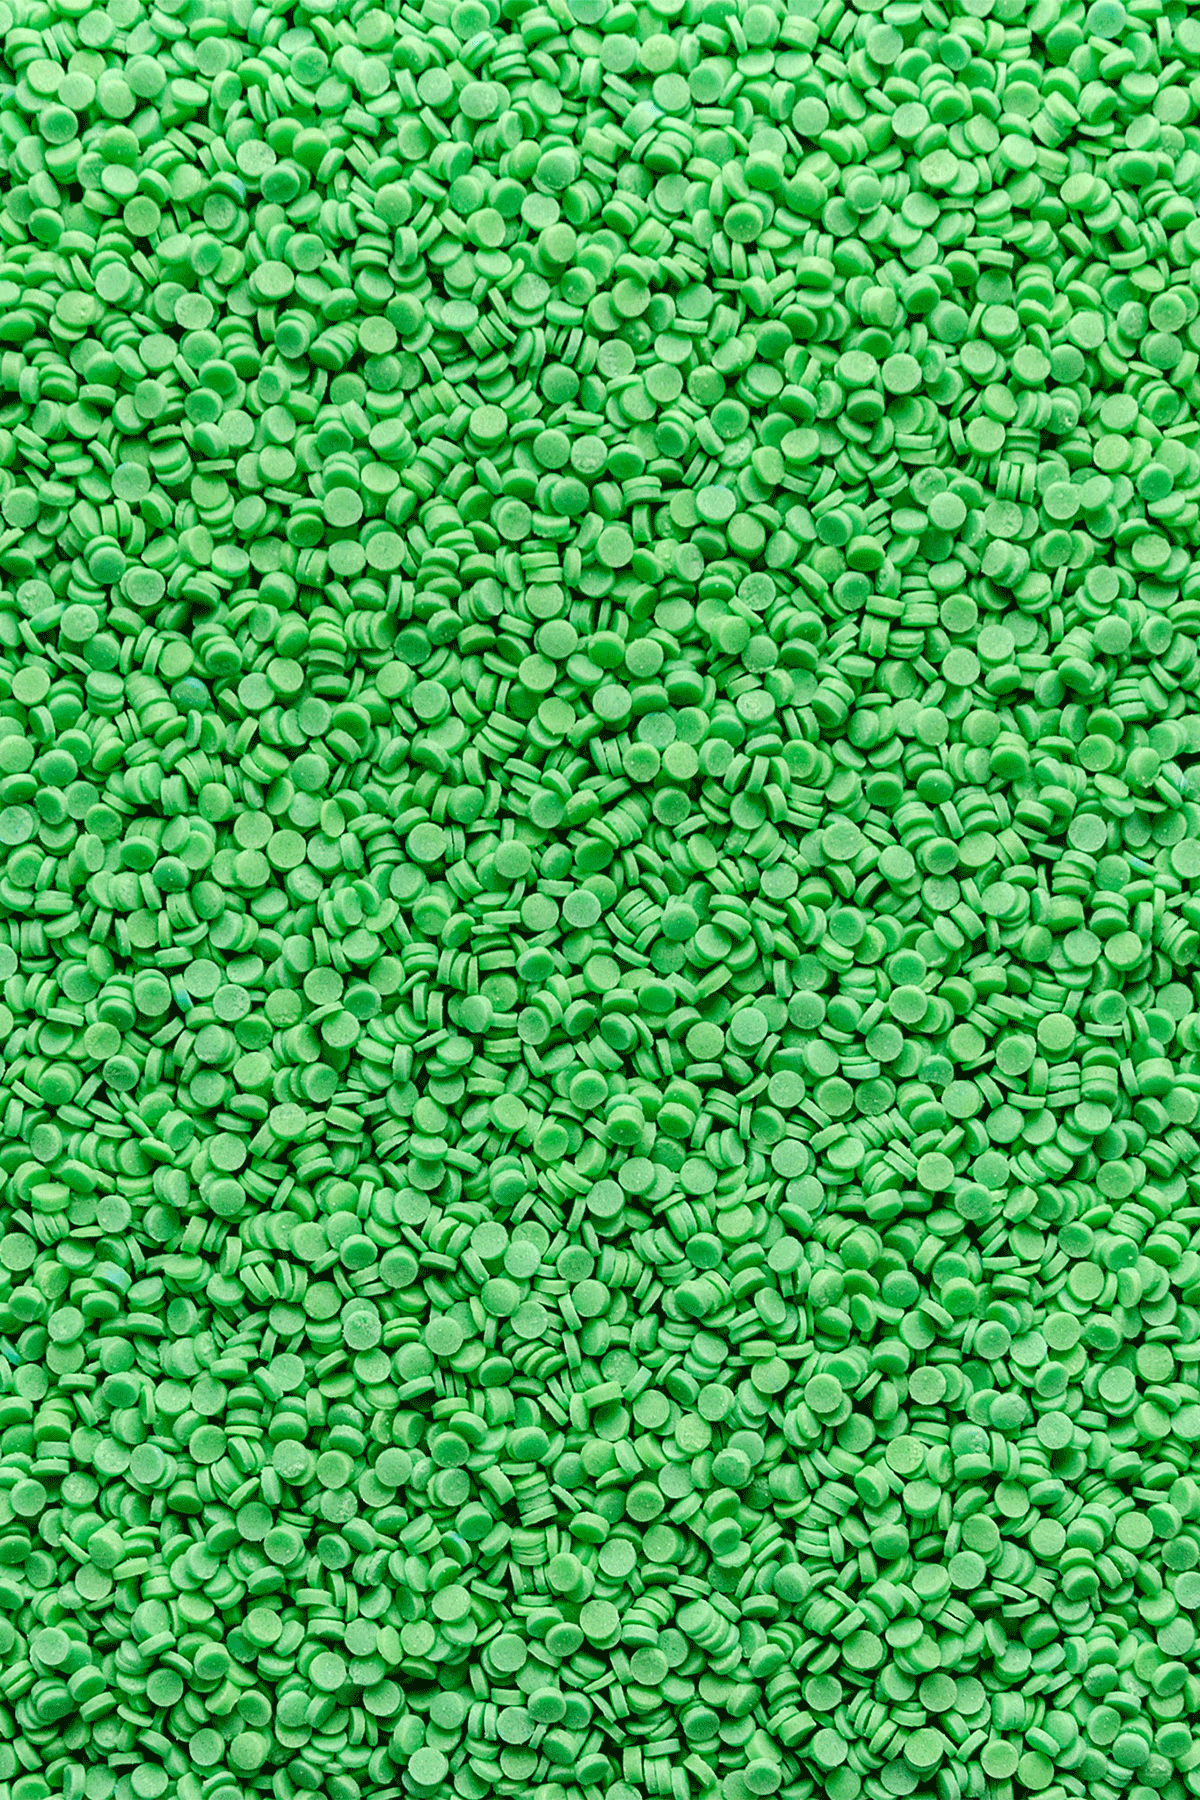 Sugar Confetti - Green (Vegan) Sprinkles Sprinkly